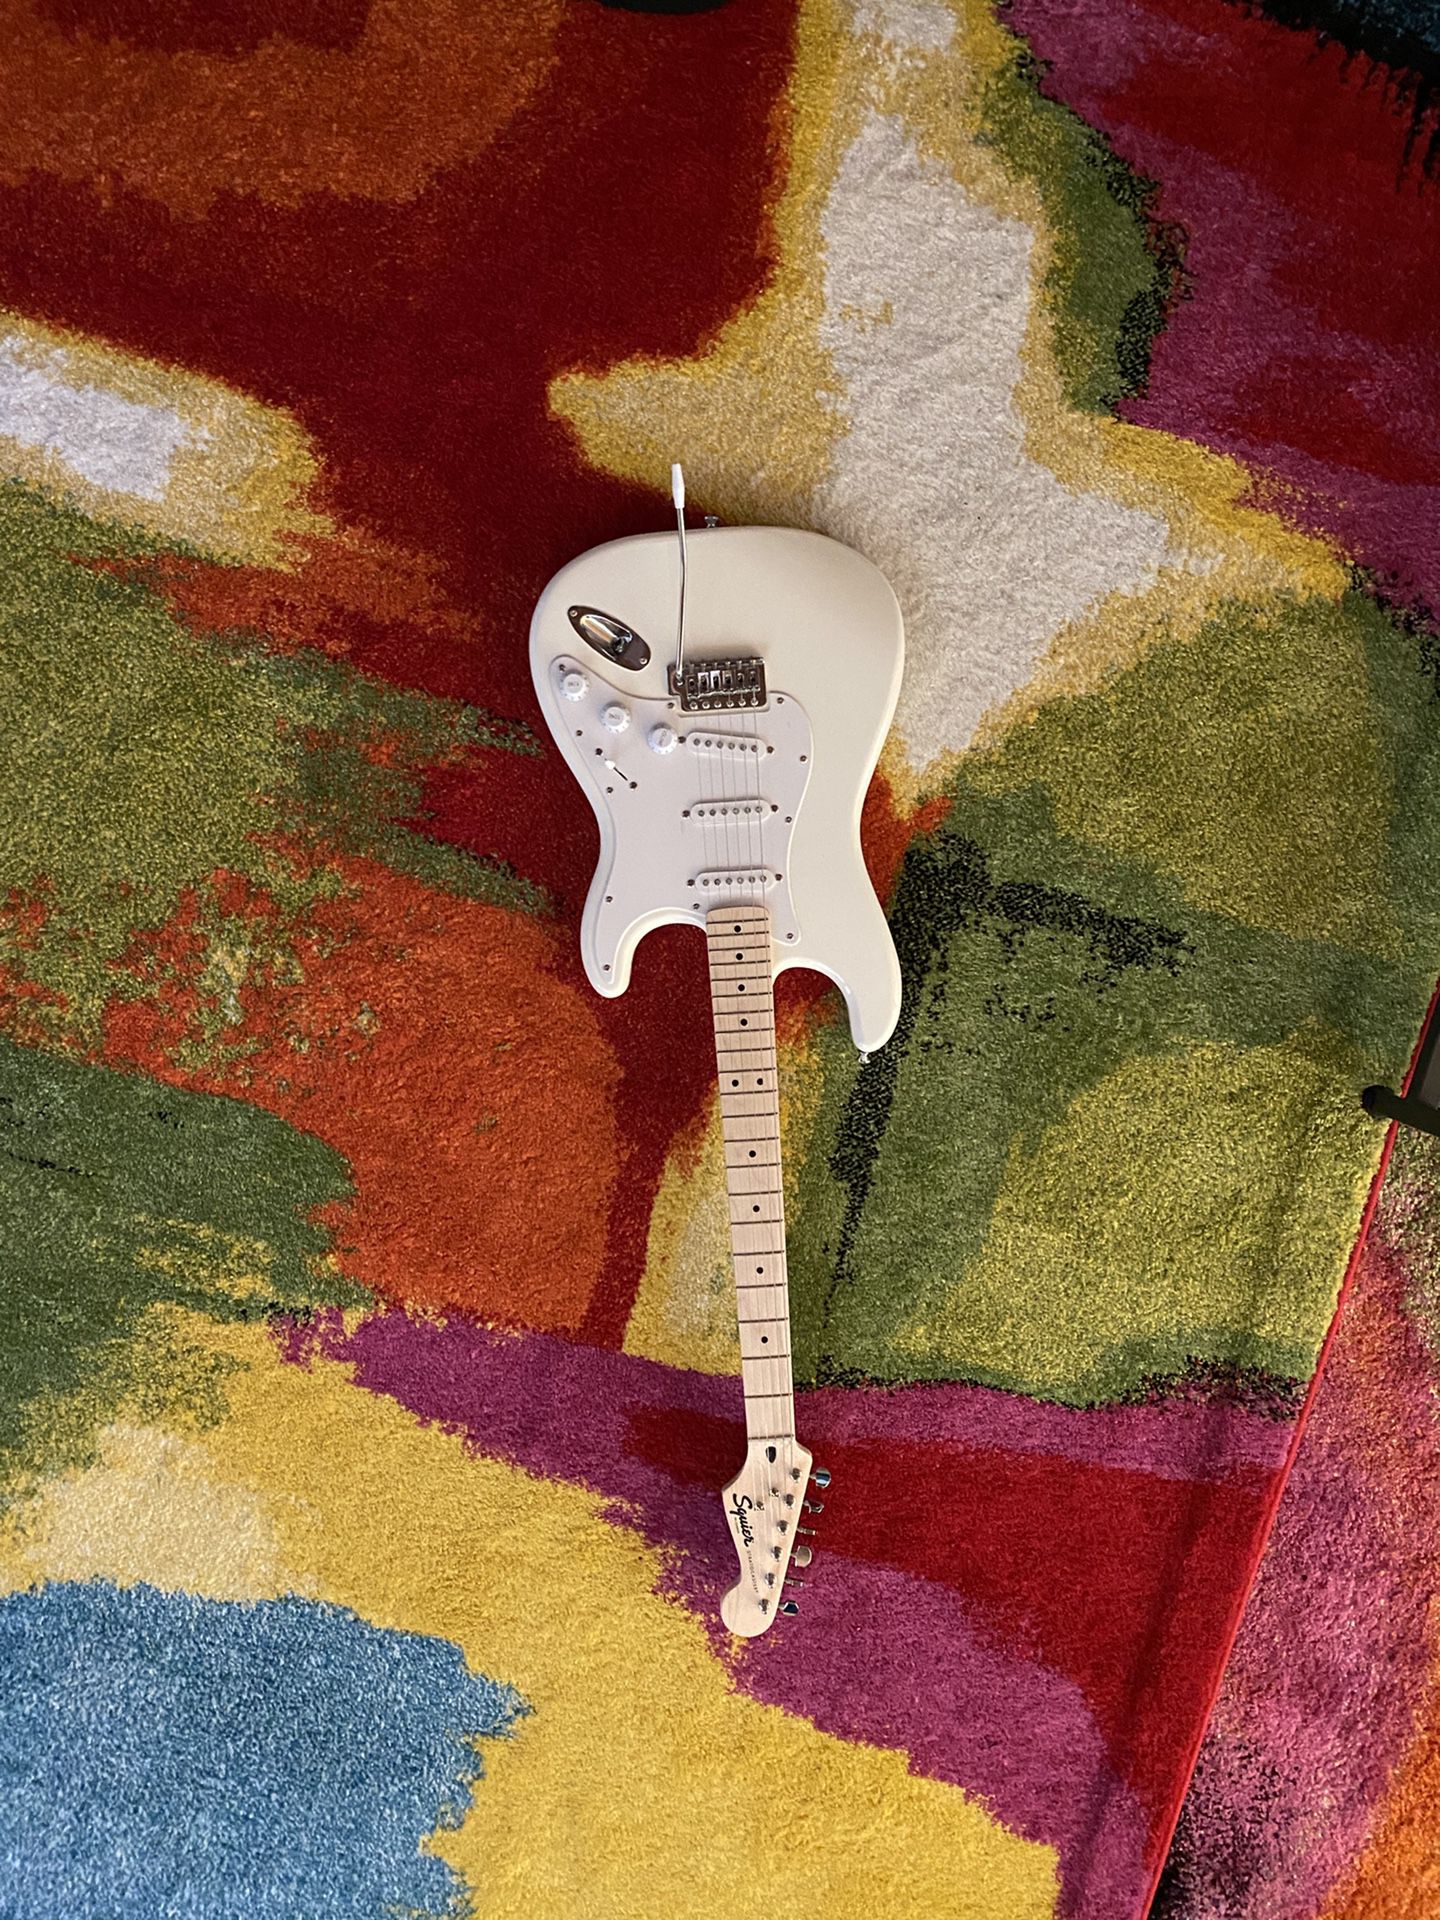 Squier white guitar